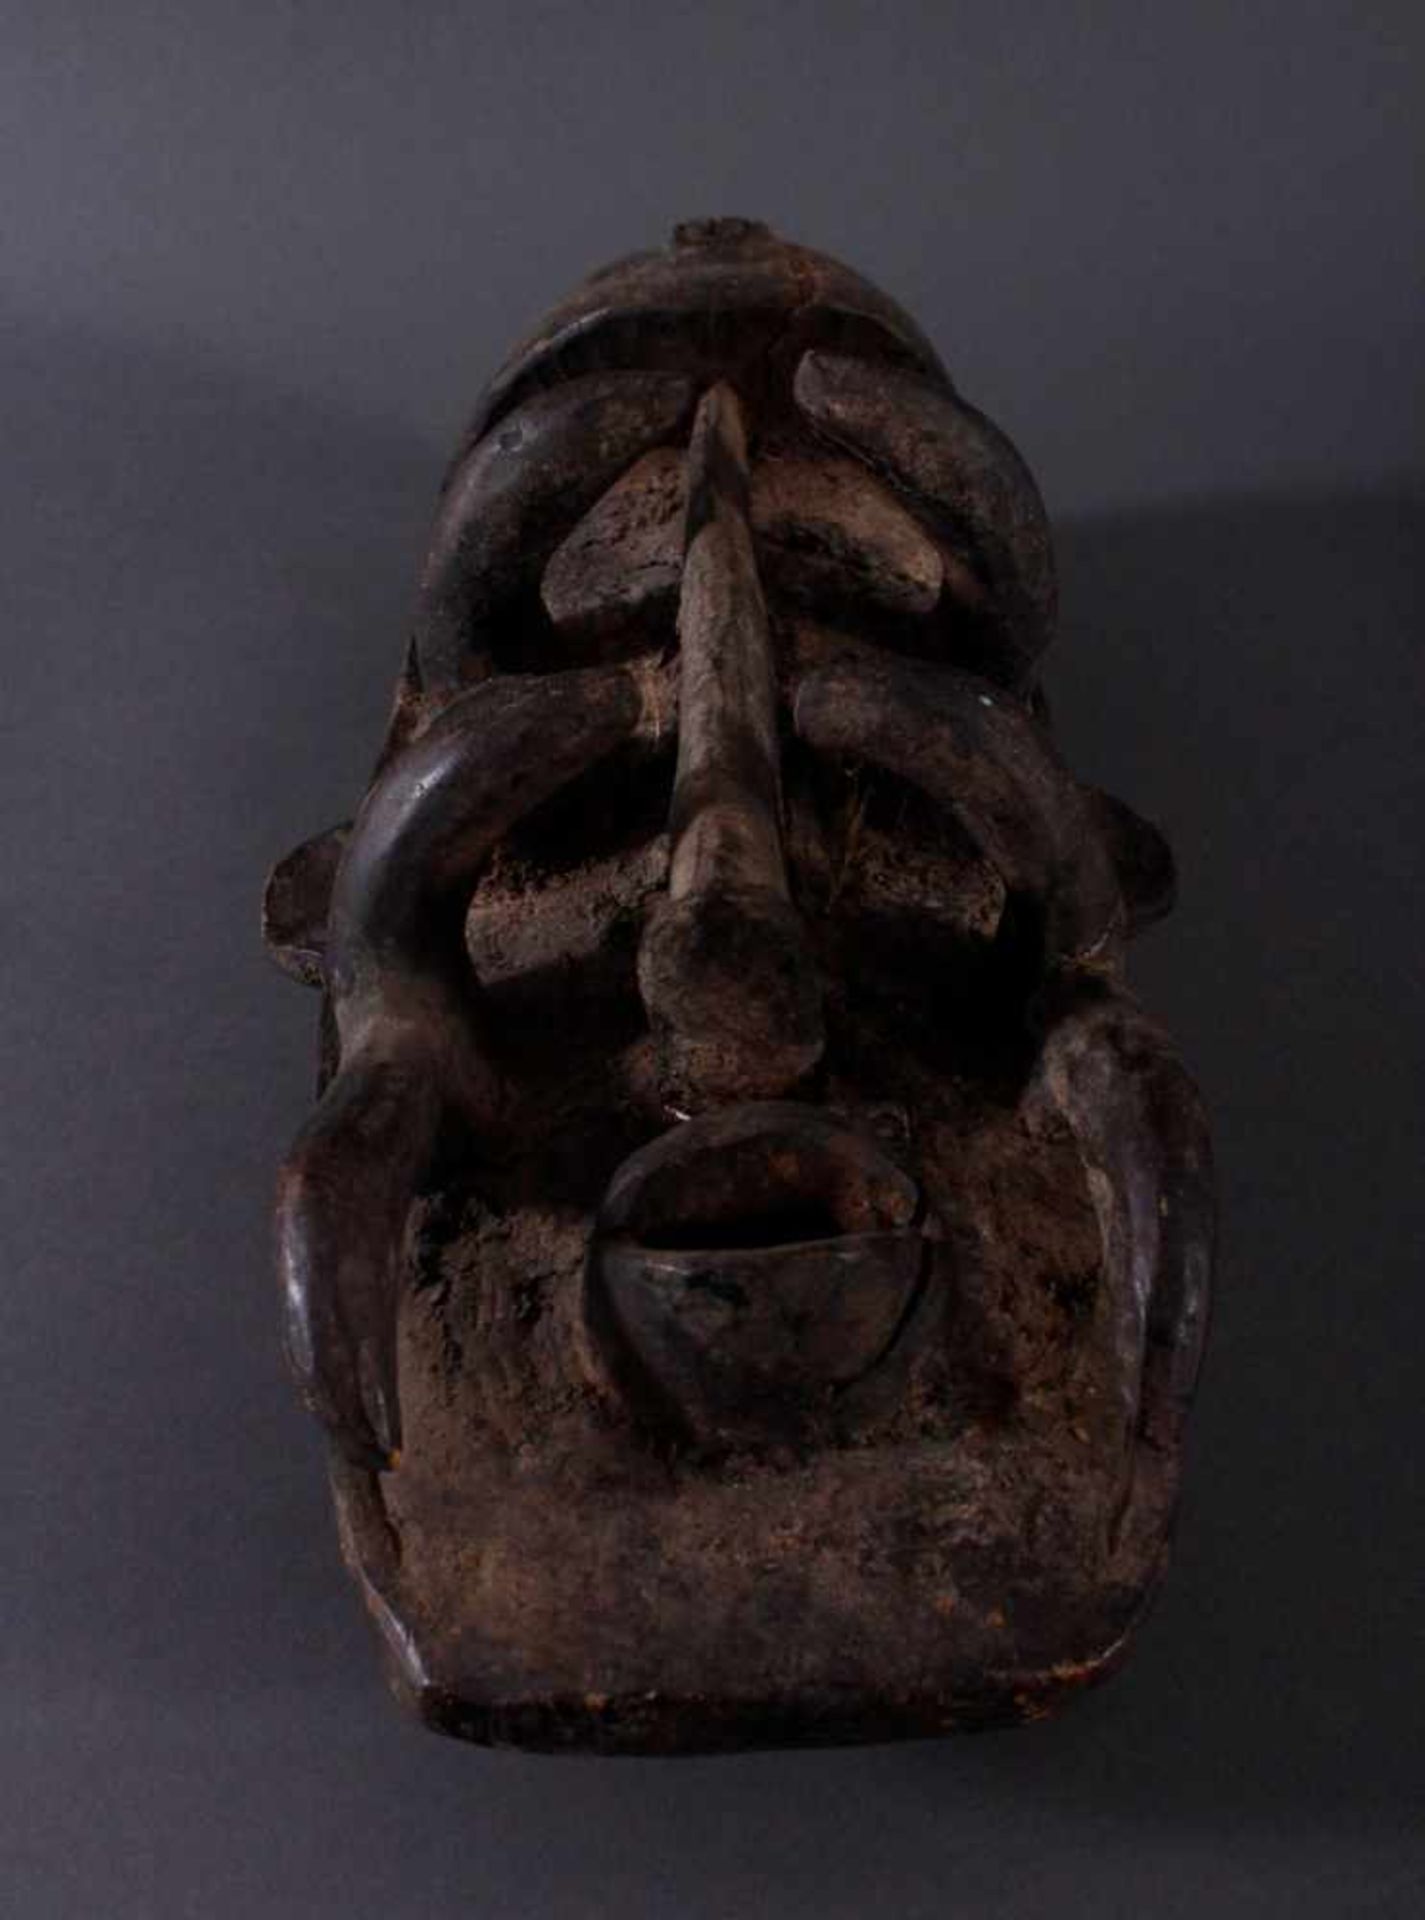 Antike Maske der Bete, 1. Hälfte 20. Jh.Aus dem Vollolzn geschnitzt, Farbreste, Verkrustungen, ca. - Image 4 of 6